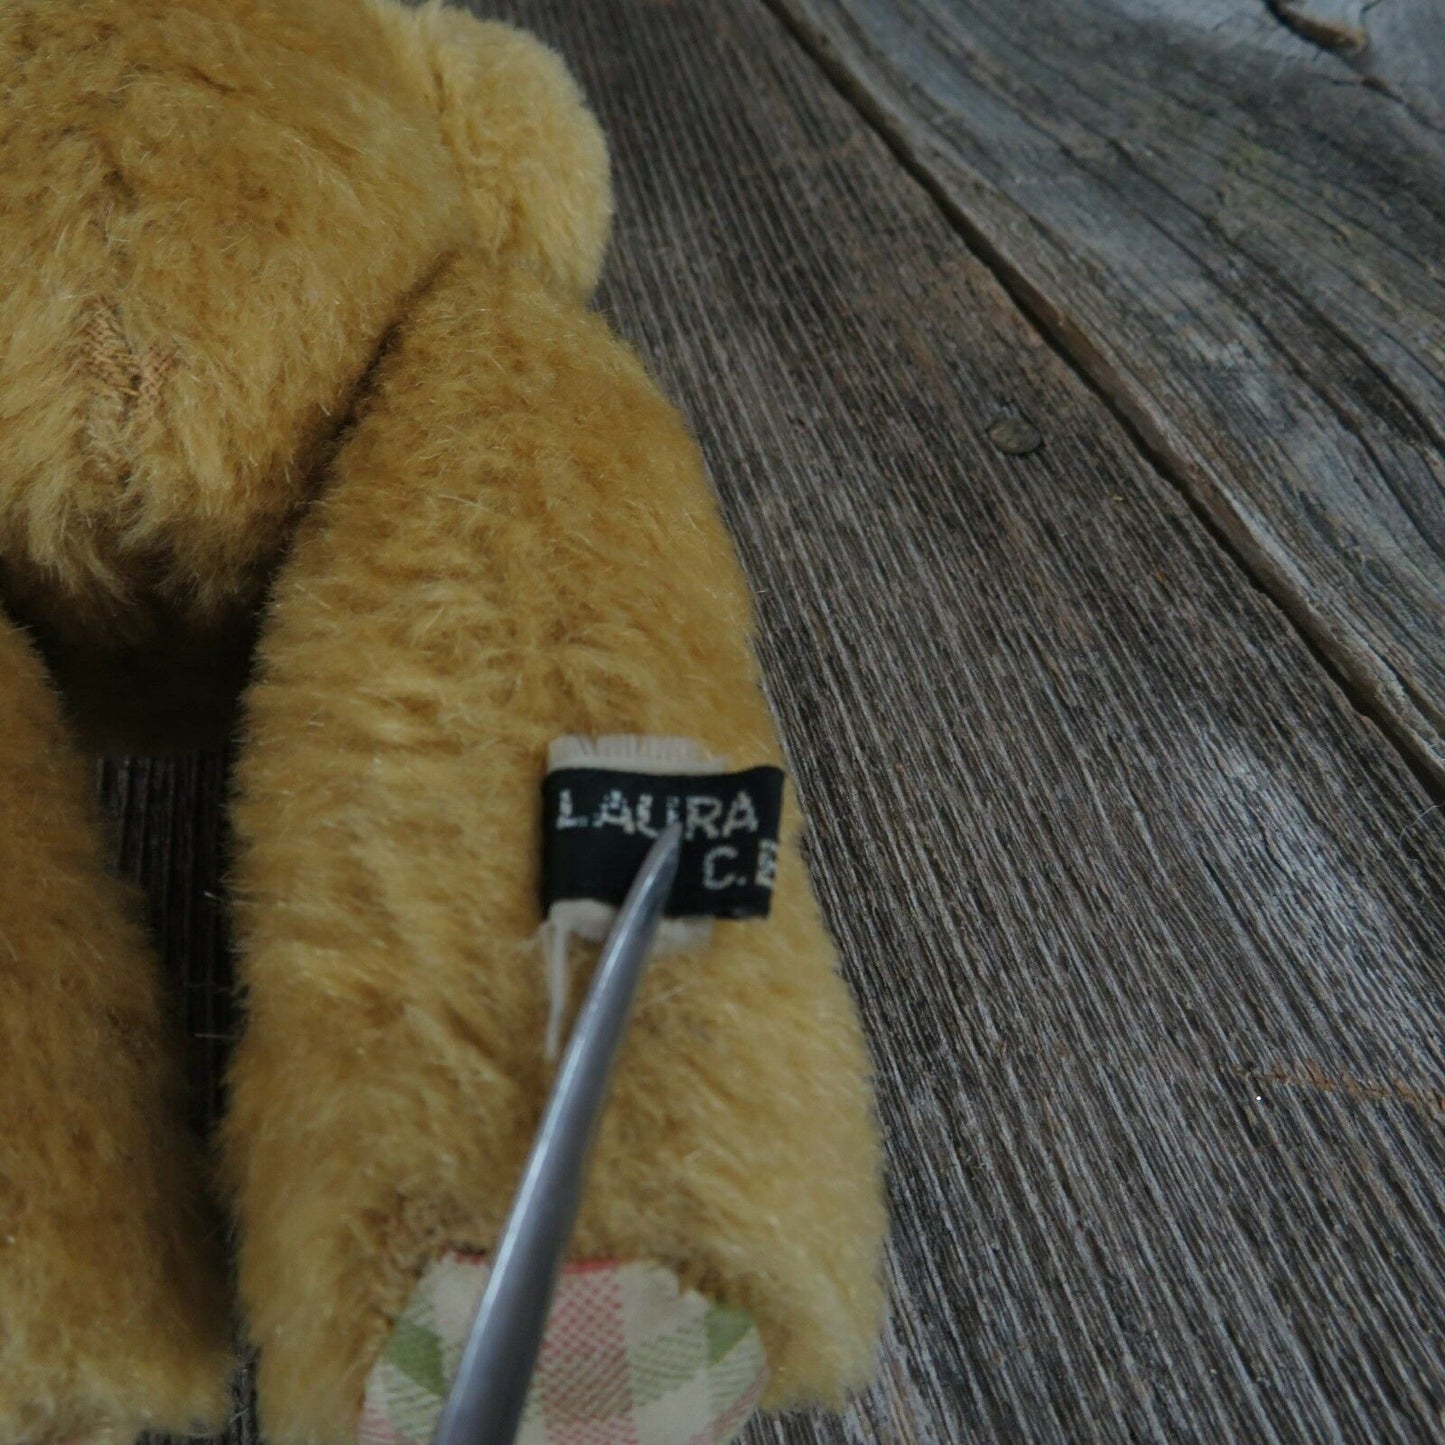 Vintage Mohair Teddy Bear Jointed Plush Stuffed Animal Laura Ashley Gingham Glass Eyes - At Grandma's Table